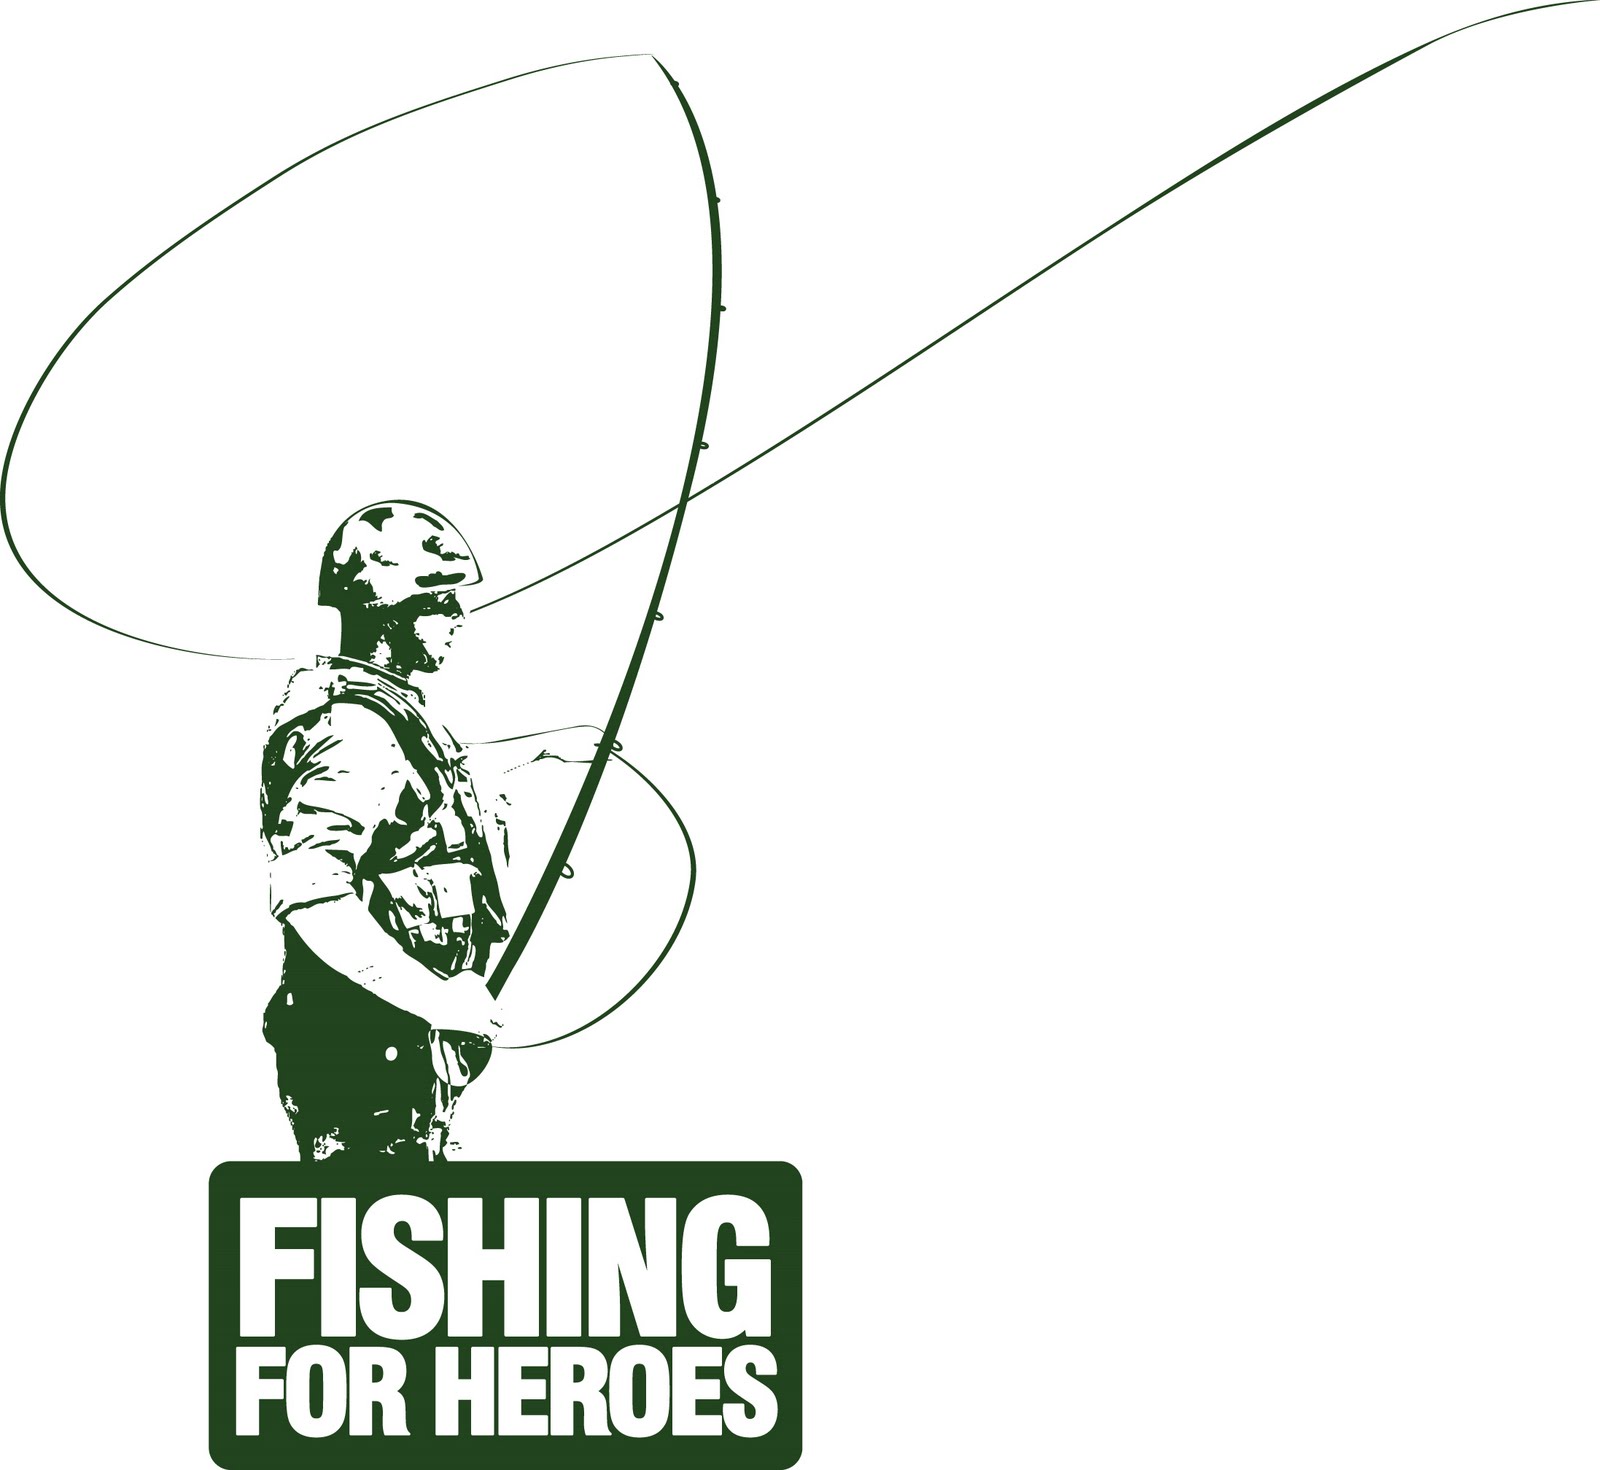 Логотип нахлыст. Flying Fisherman лого. Wonder логотип рыбалка. Пирс logo рыбалка.